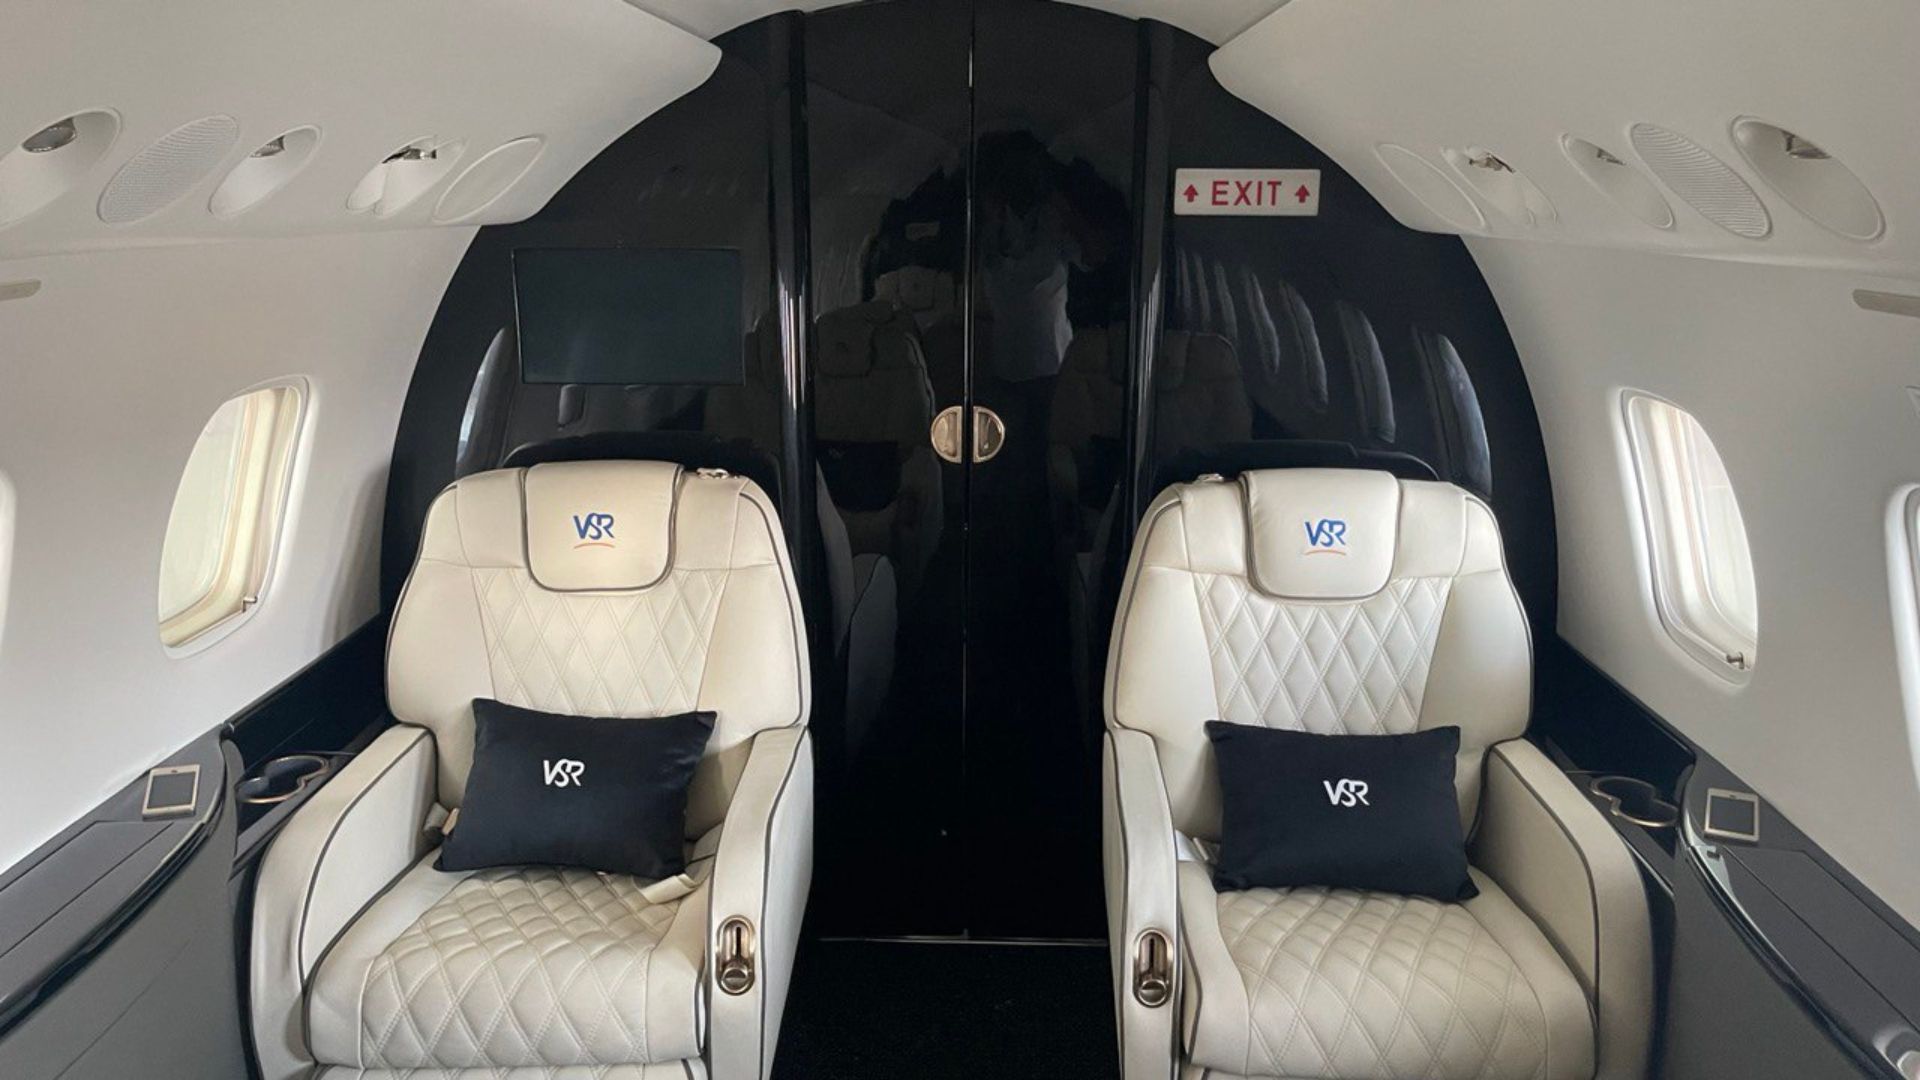 legacy aircraft customized seats